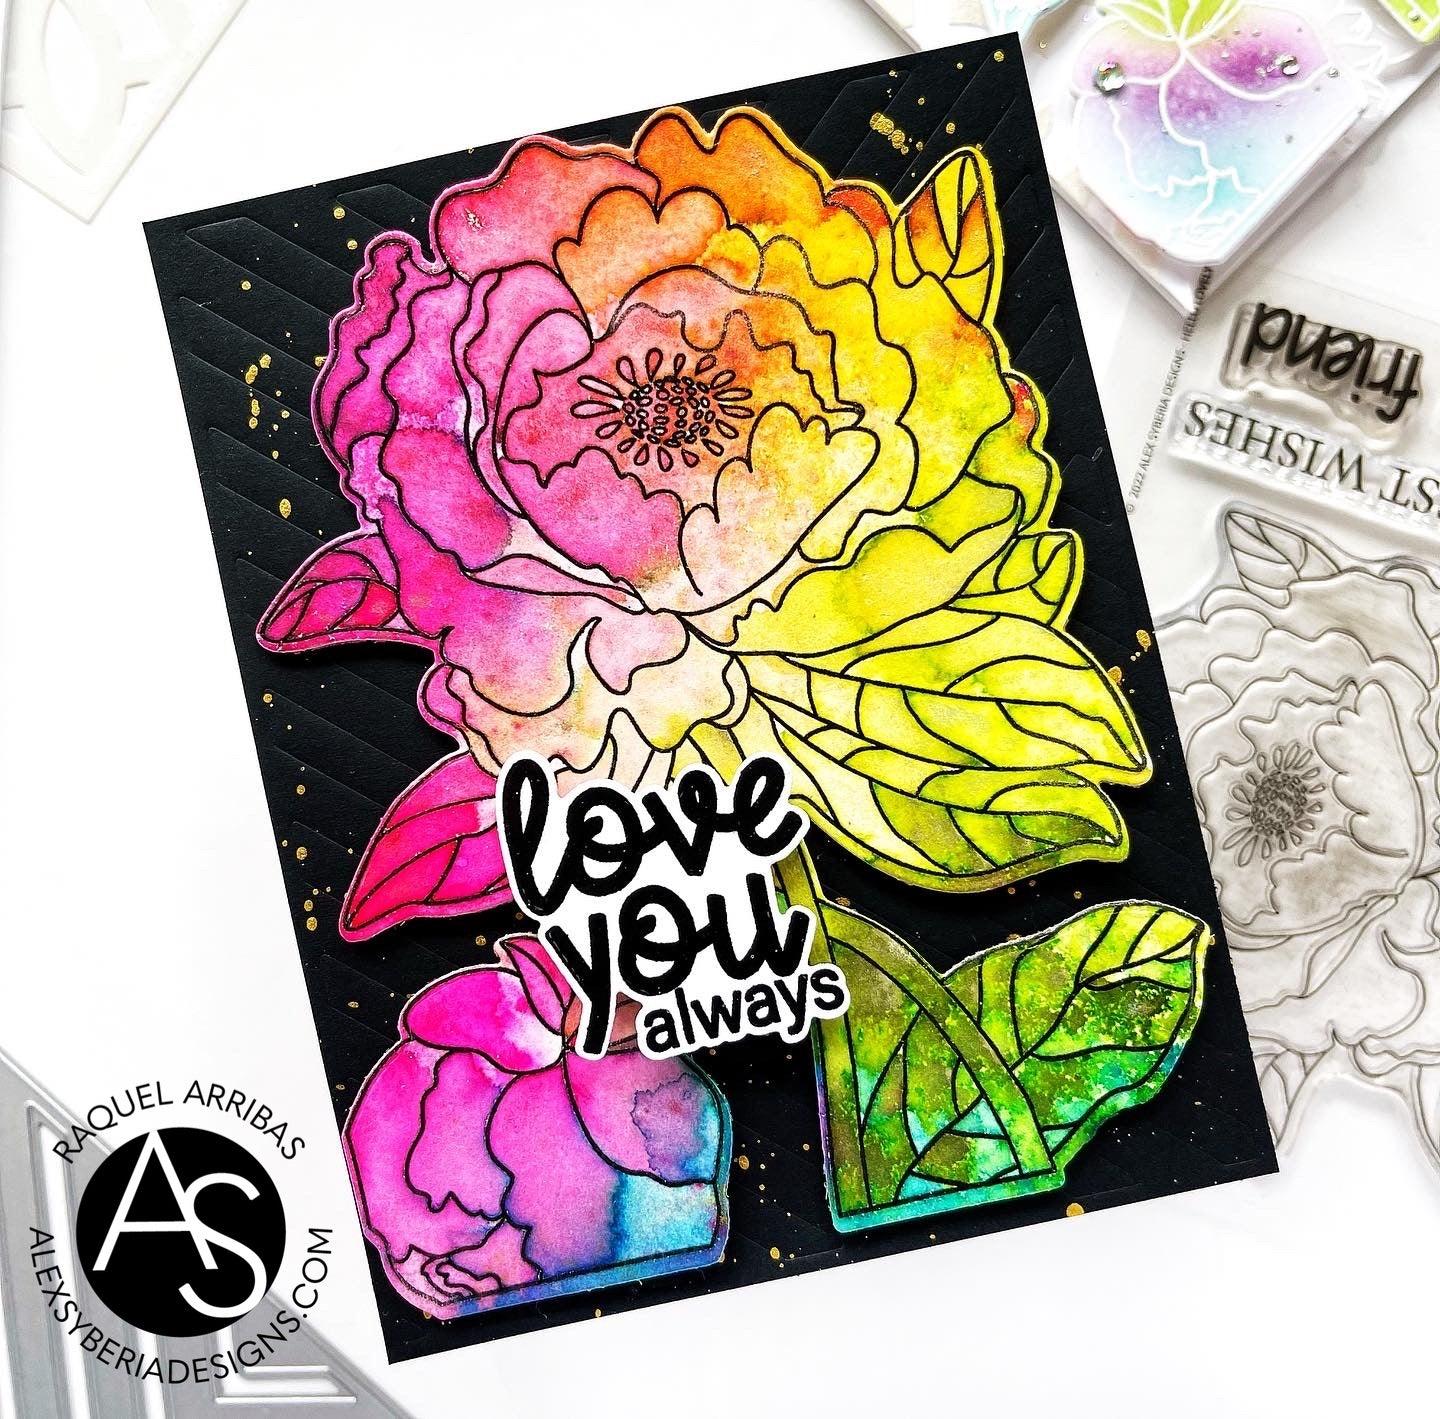 alex-syberia-designs-cardmaking-tutorials-stamps-dies-stencils-smile-die-watercoloring-rainbow-cards